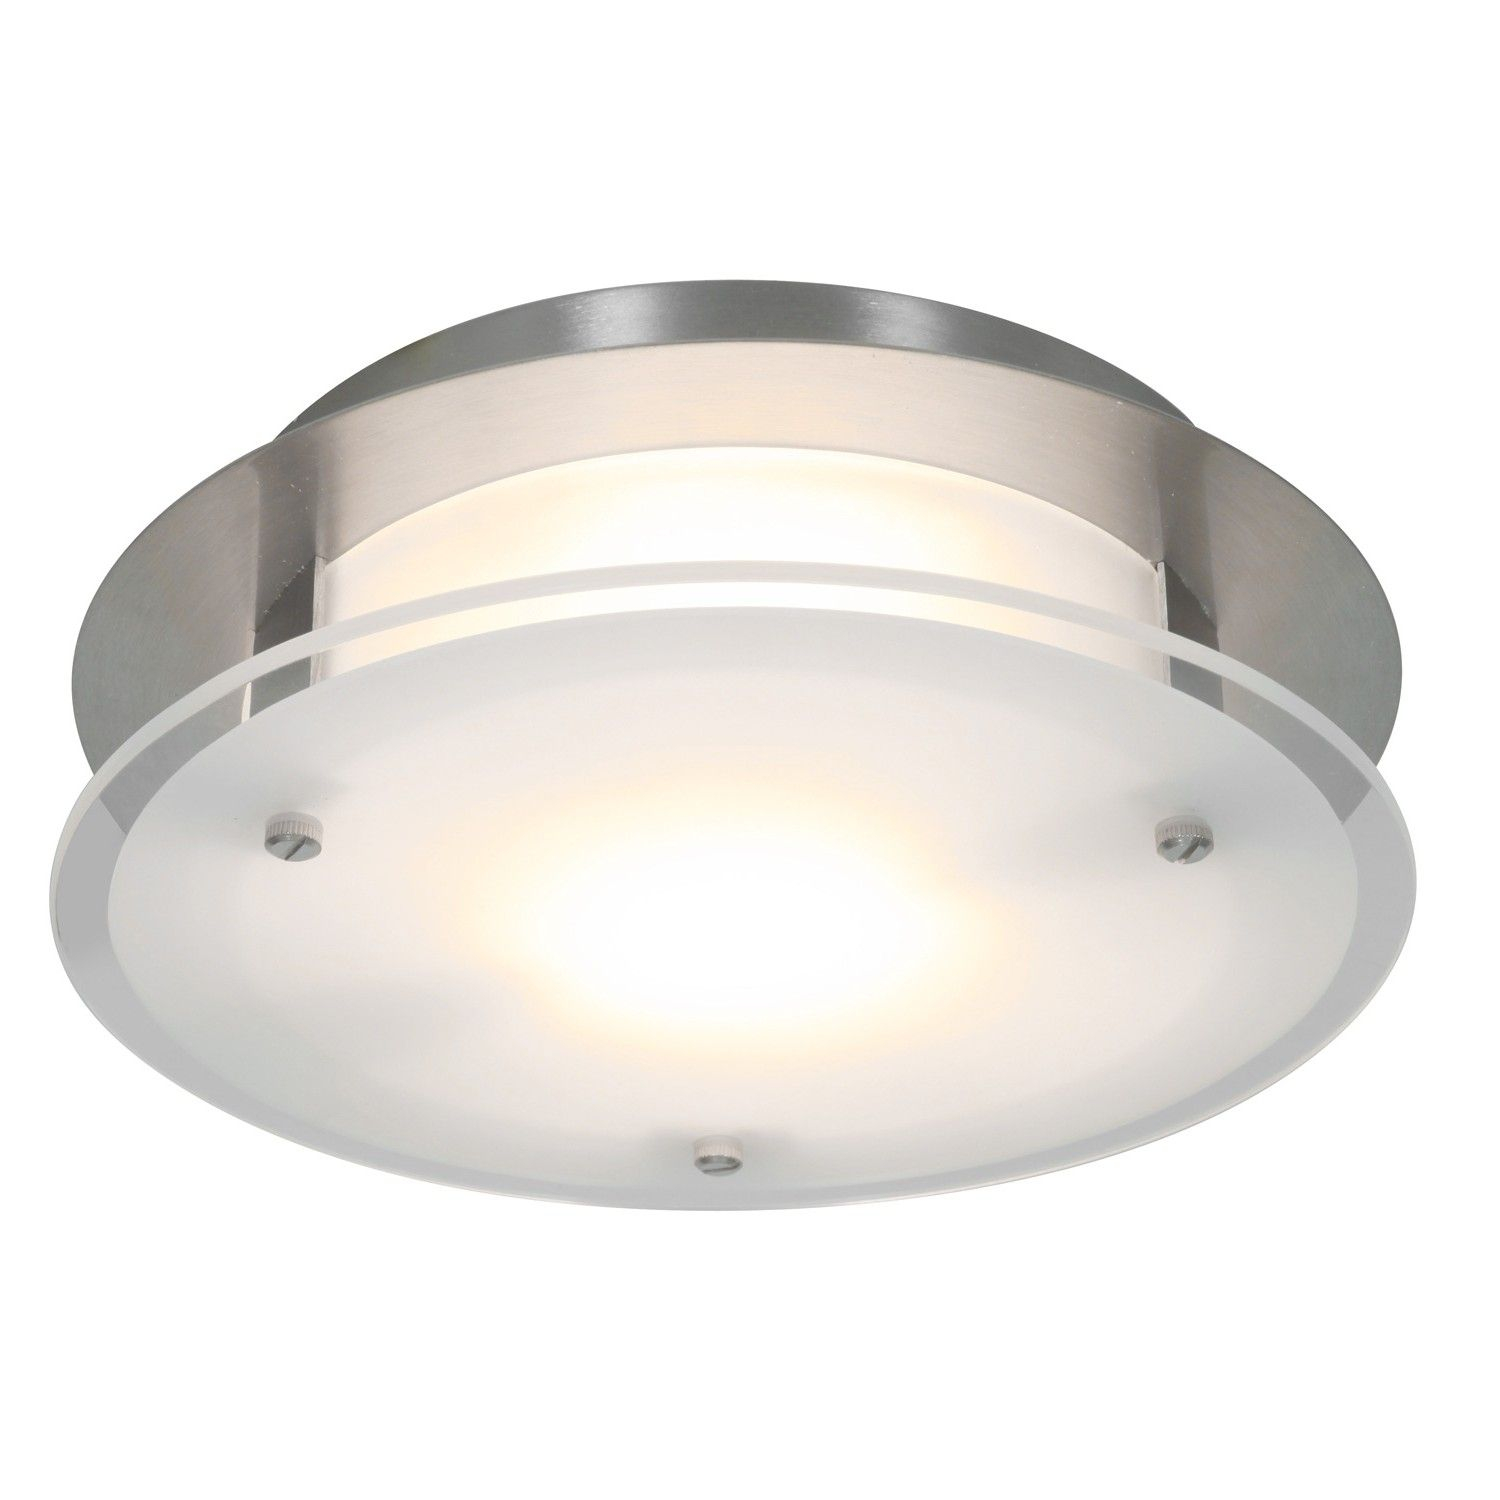 Luxury Ductless Bathroom Fan With Light Bathroom Fan Light throughout sizing 1500 X 1500